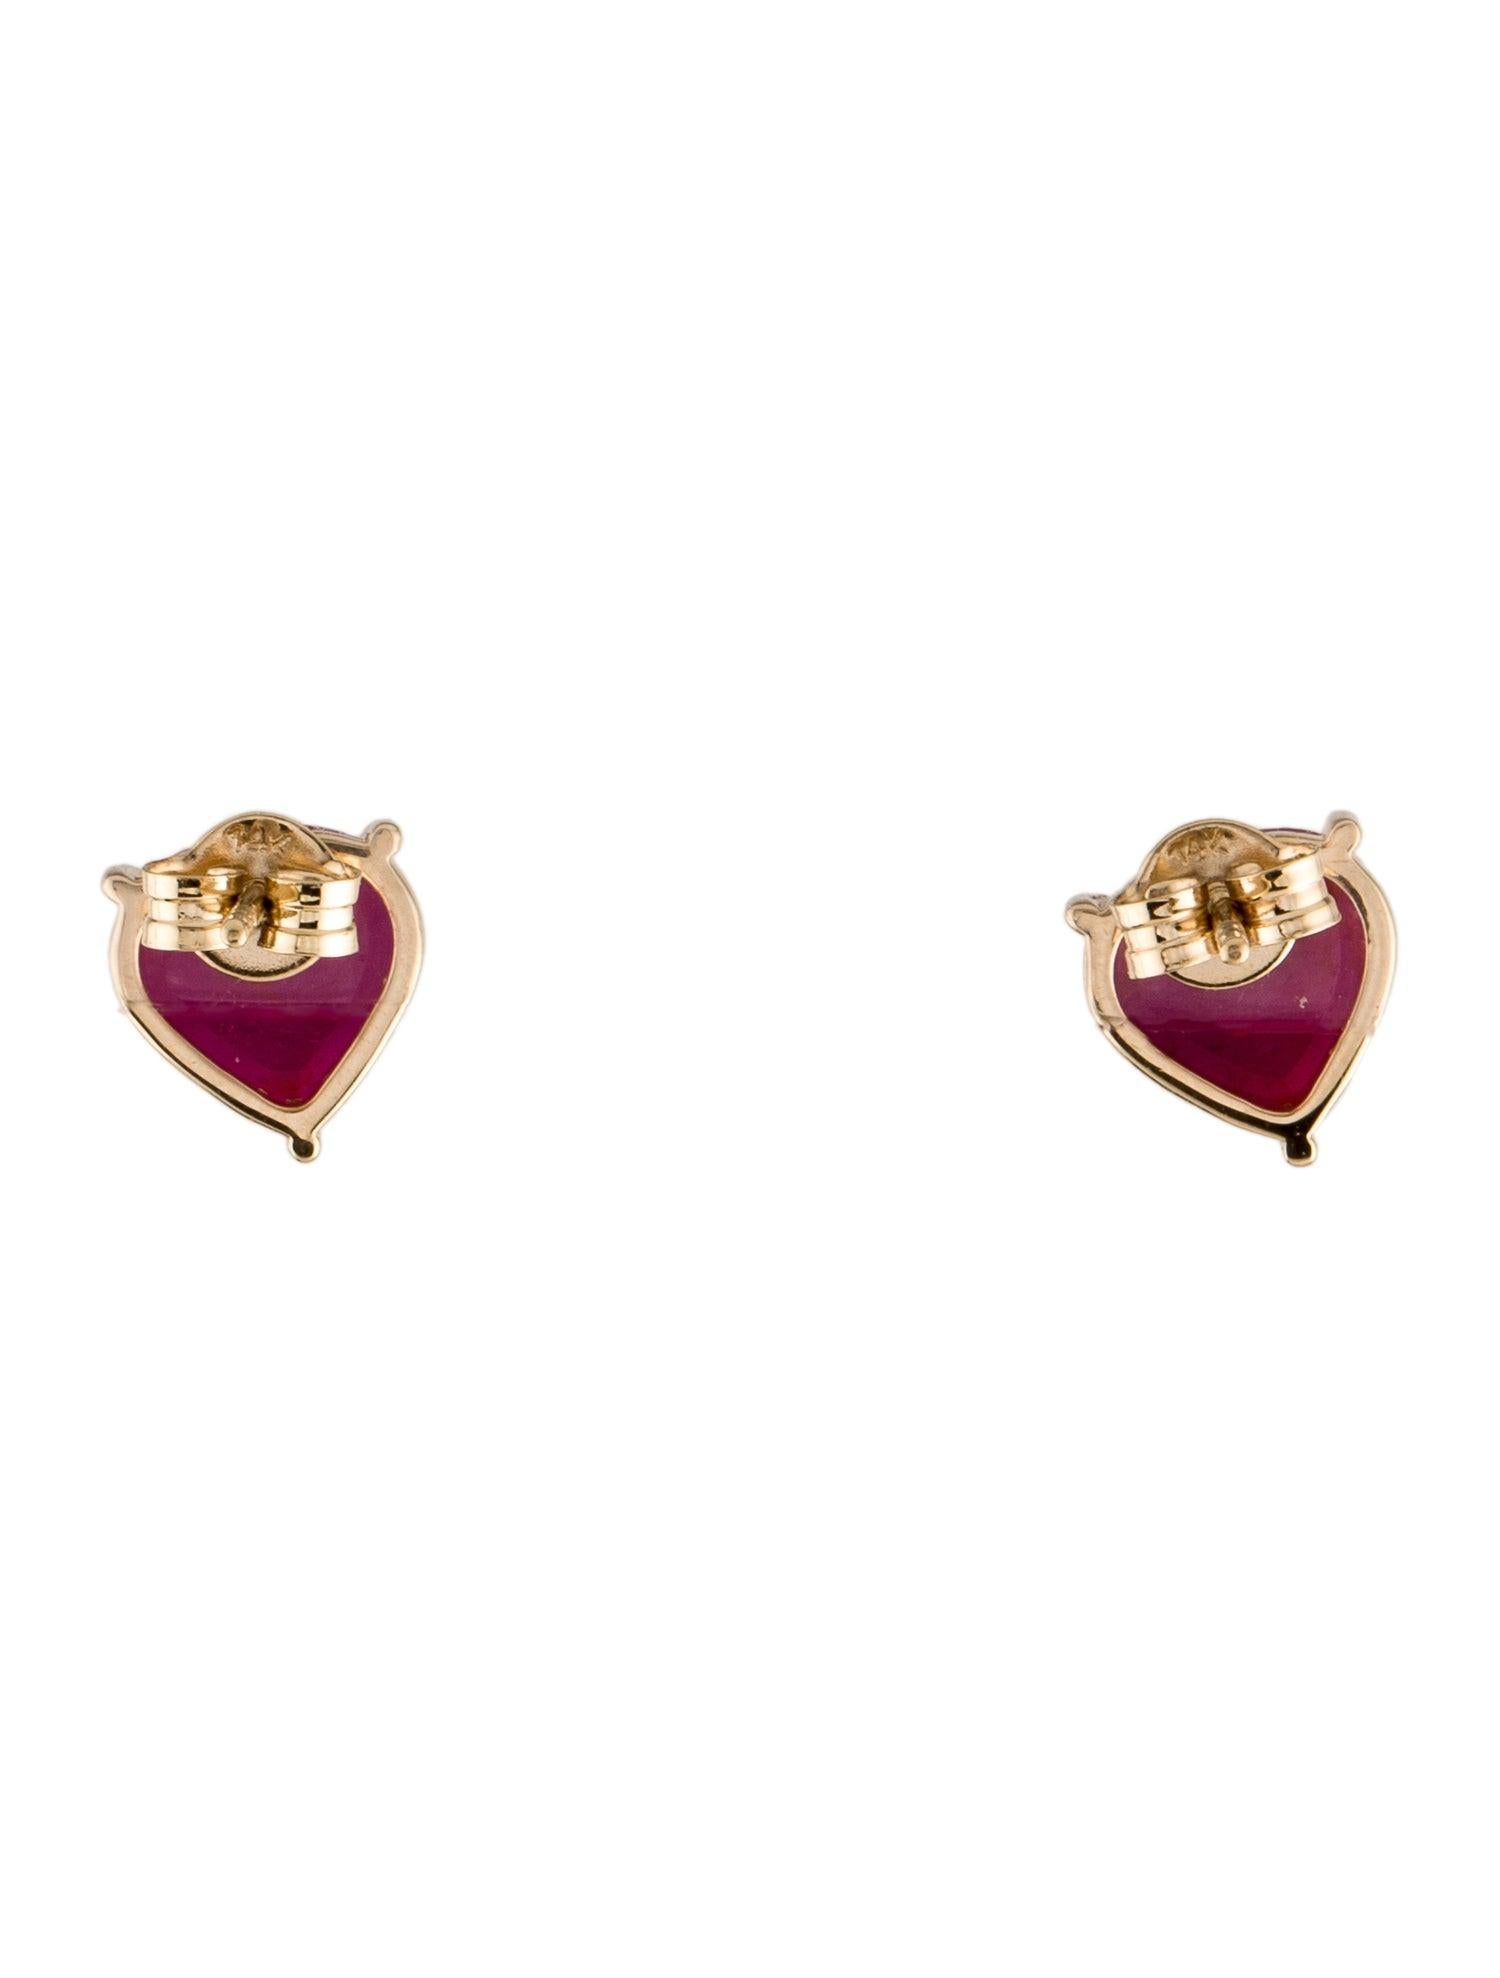 Brilliant Cut 14K Ruby Stud Earrings - 6.39ctw, Elegant Gemstone Jewelry, Timeless Style For Sale